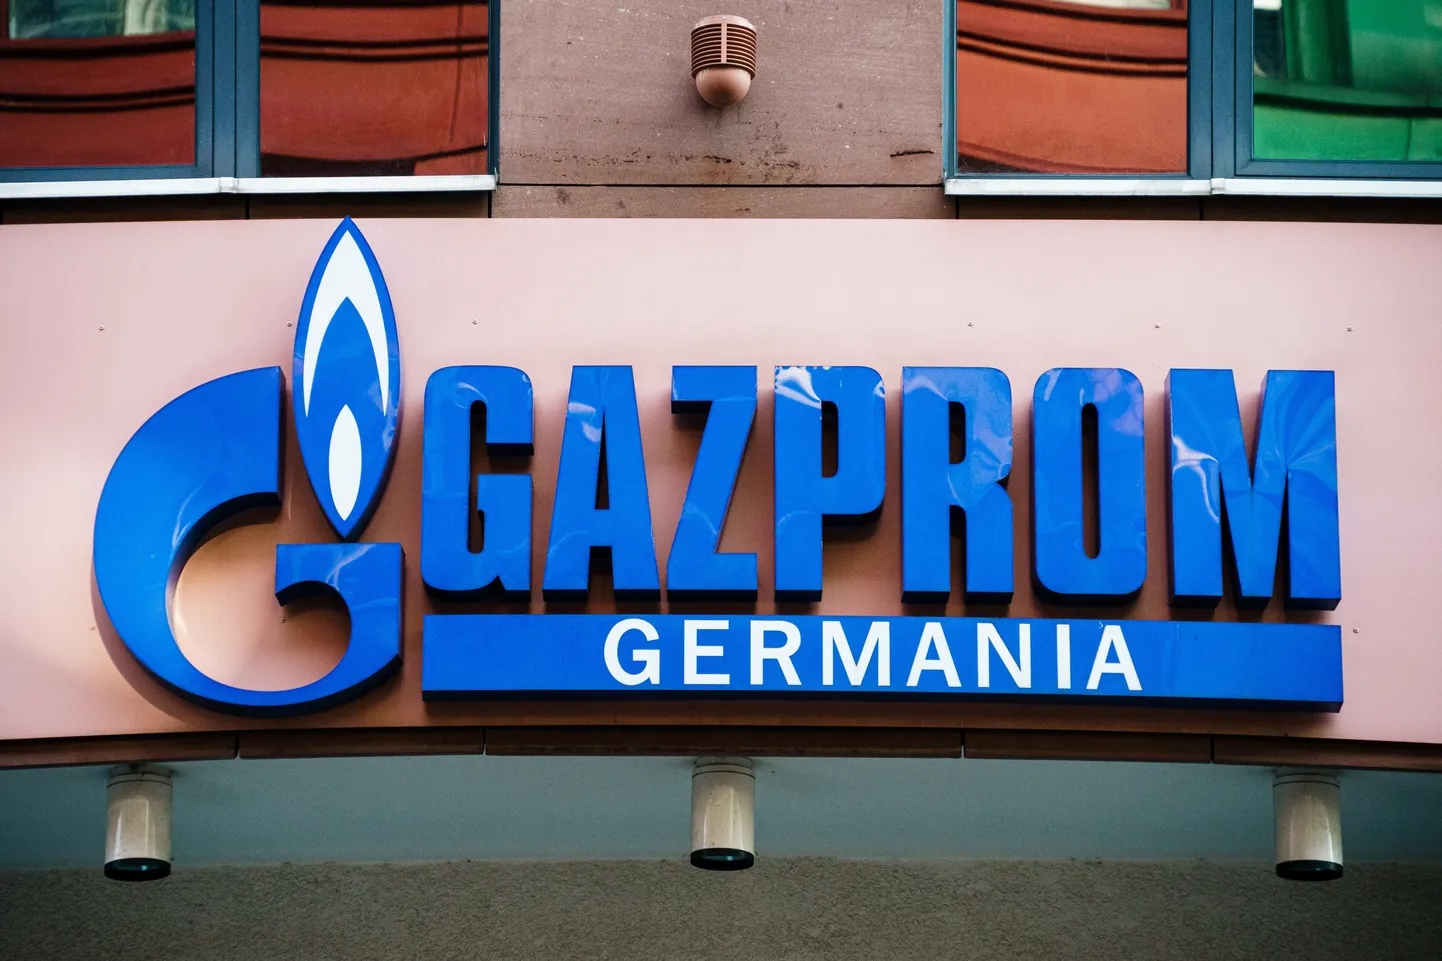 Vācijas holdingkompānija "Gazprom Germania" logo.